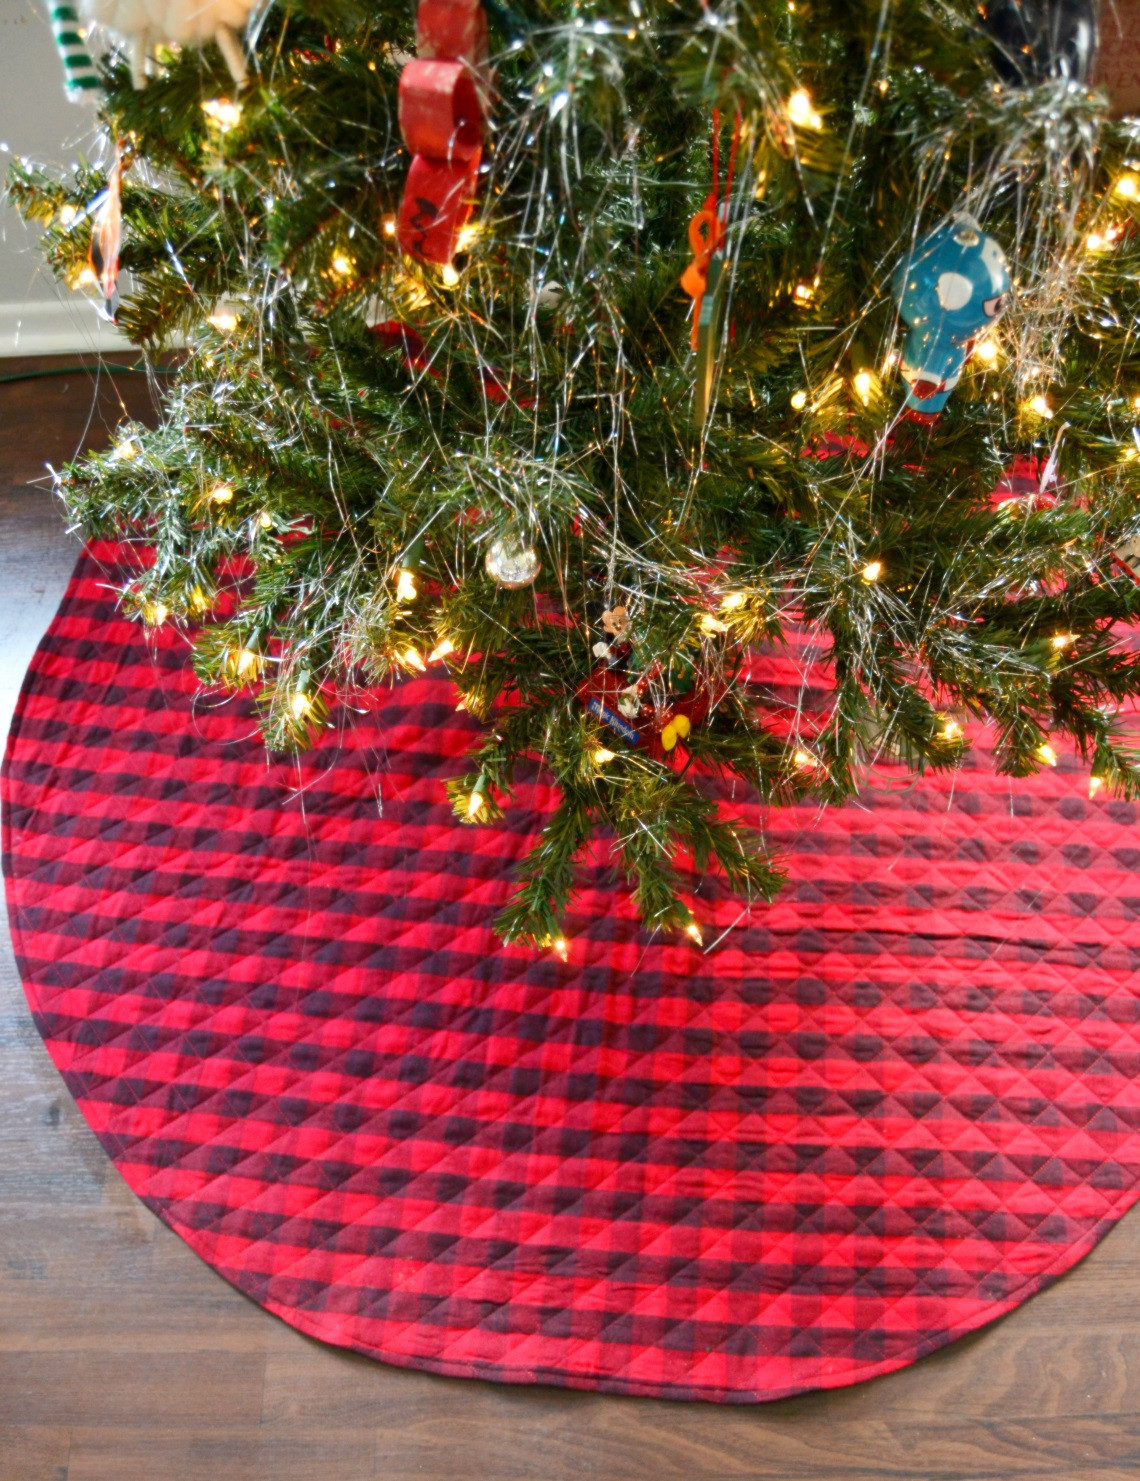 DIY Christmas Tree Skirt
 The DIY Christmas Tree Skirt that s Super Easy – Mary